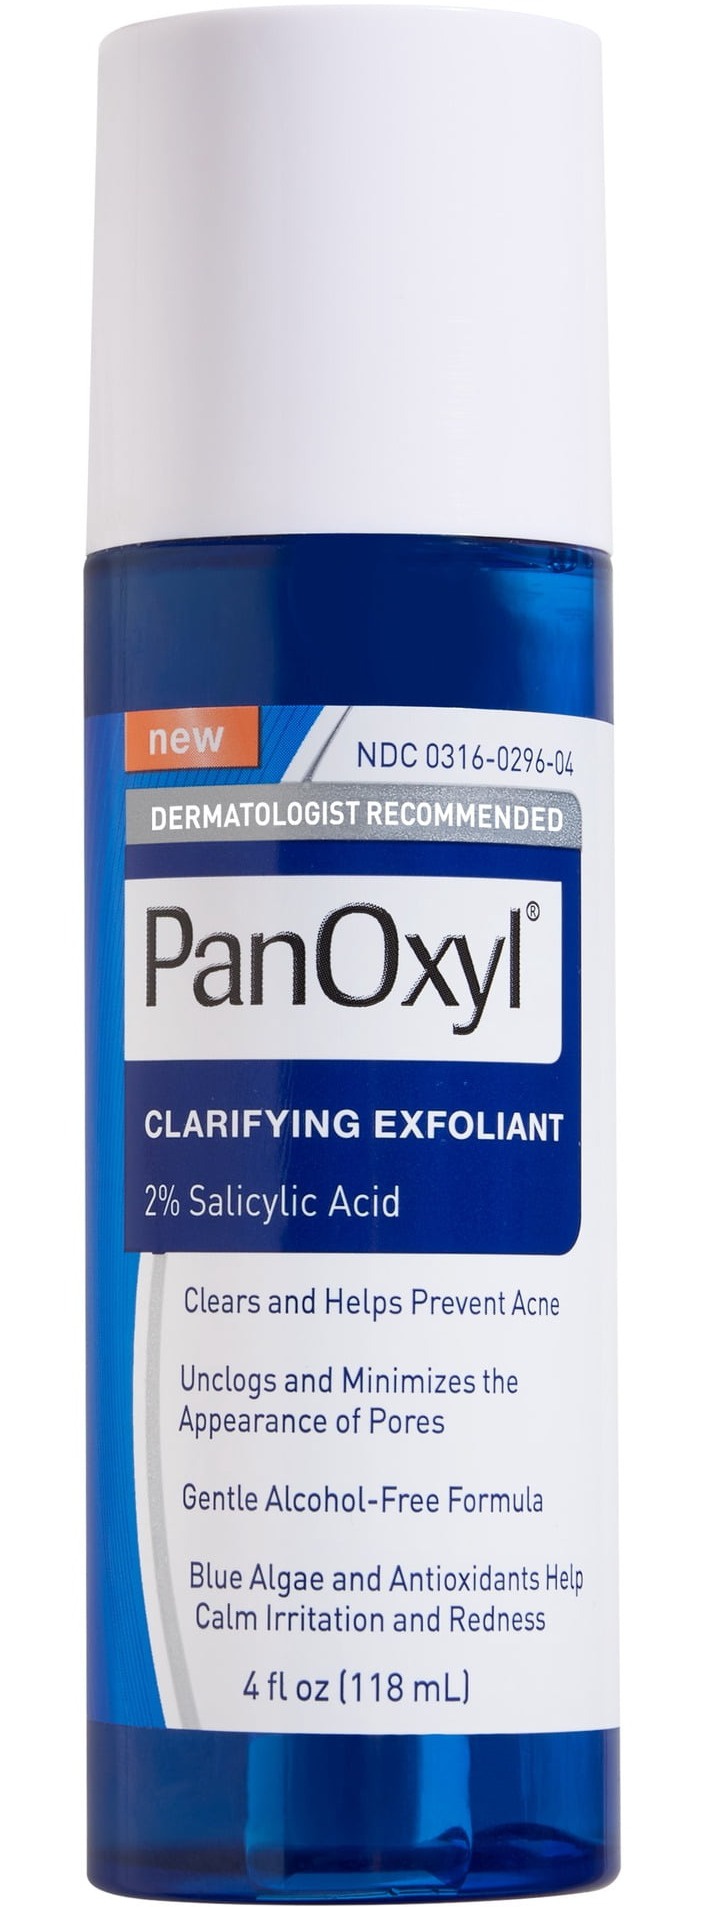 PanOxyl Clarifying Exfoliant 2% Salicylic Acid